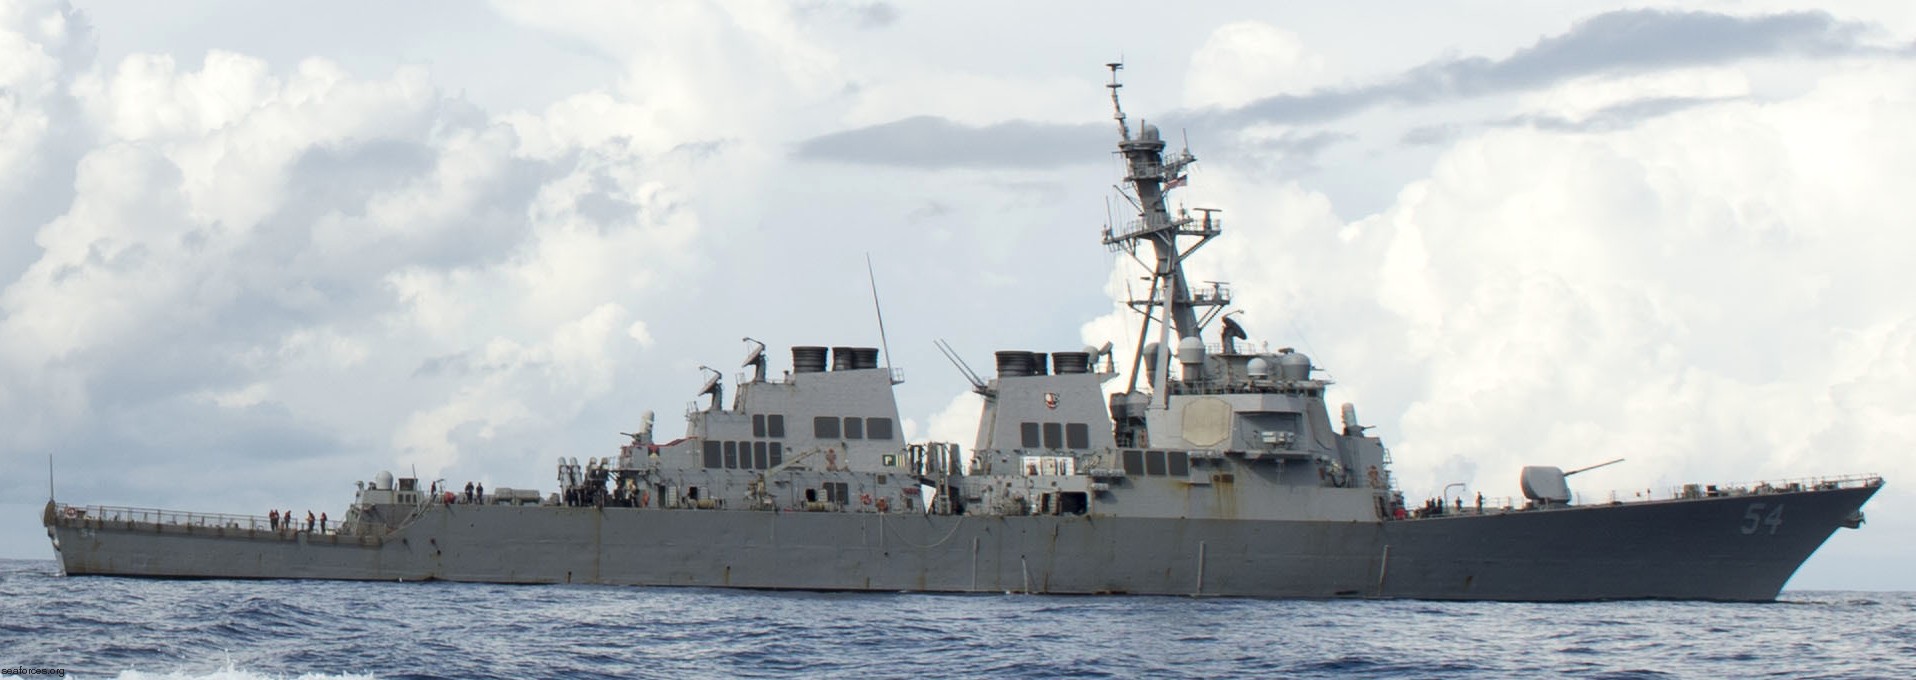 ddg-54 uss curtis wilbur destroyer us navy 125 south china sea